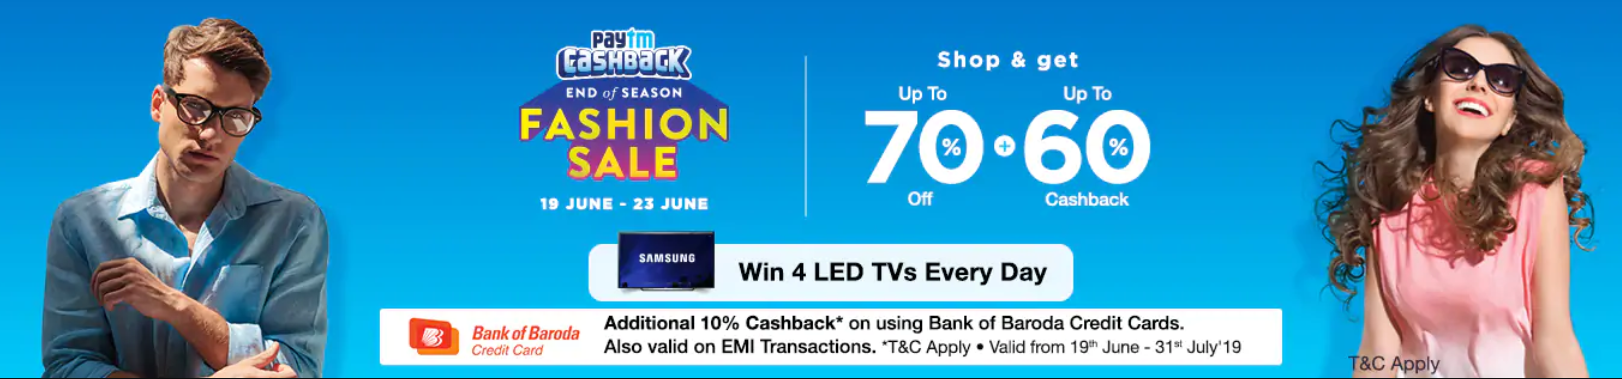 Paytm Mall – 70 % Off + 60 % Cashback on Fashion Sale 5